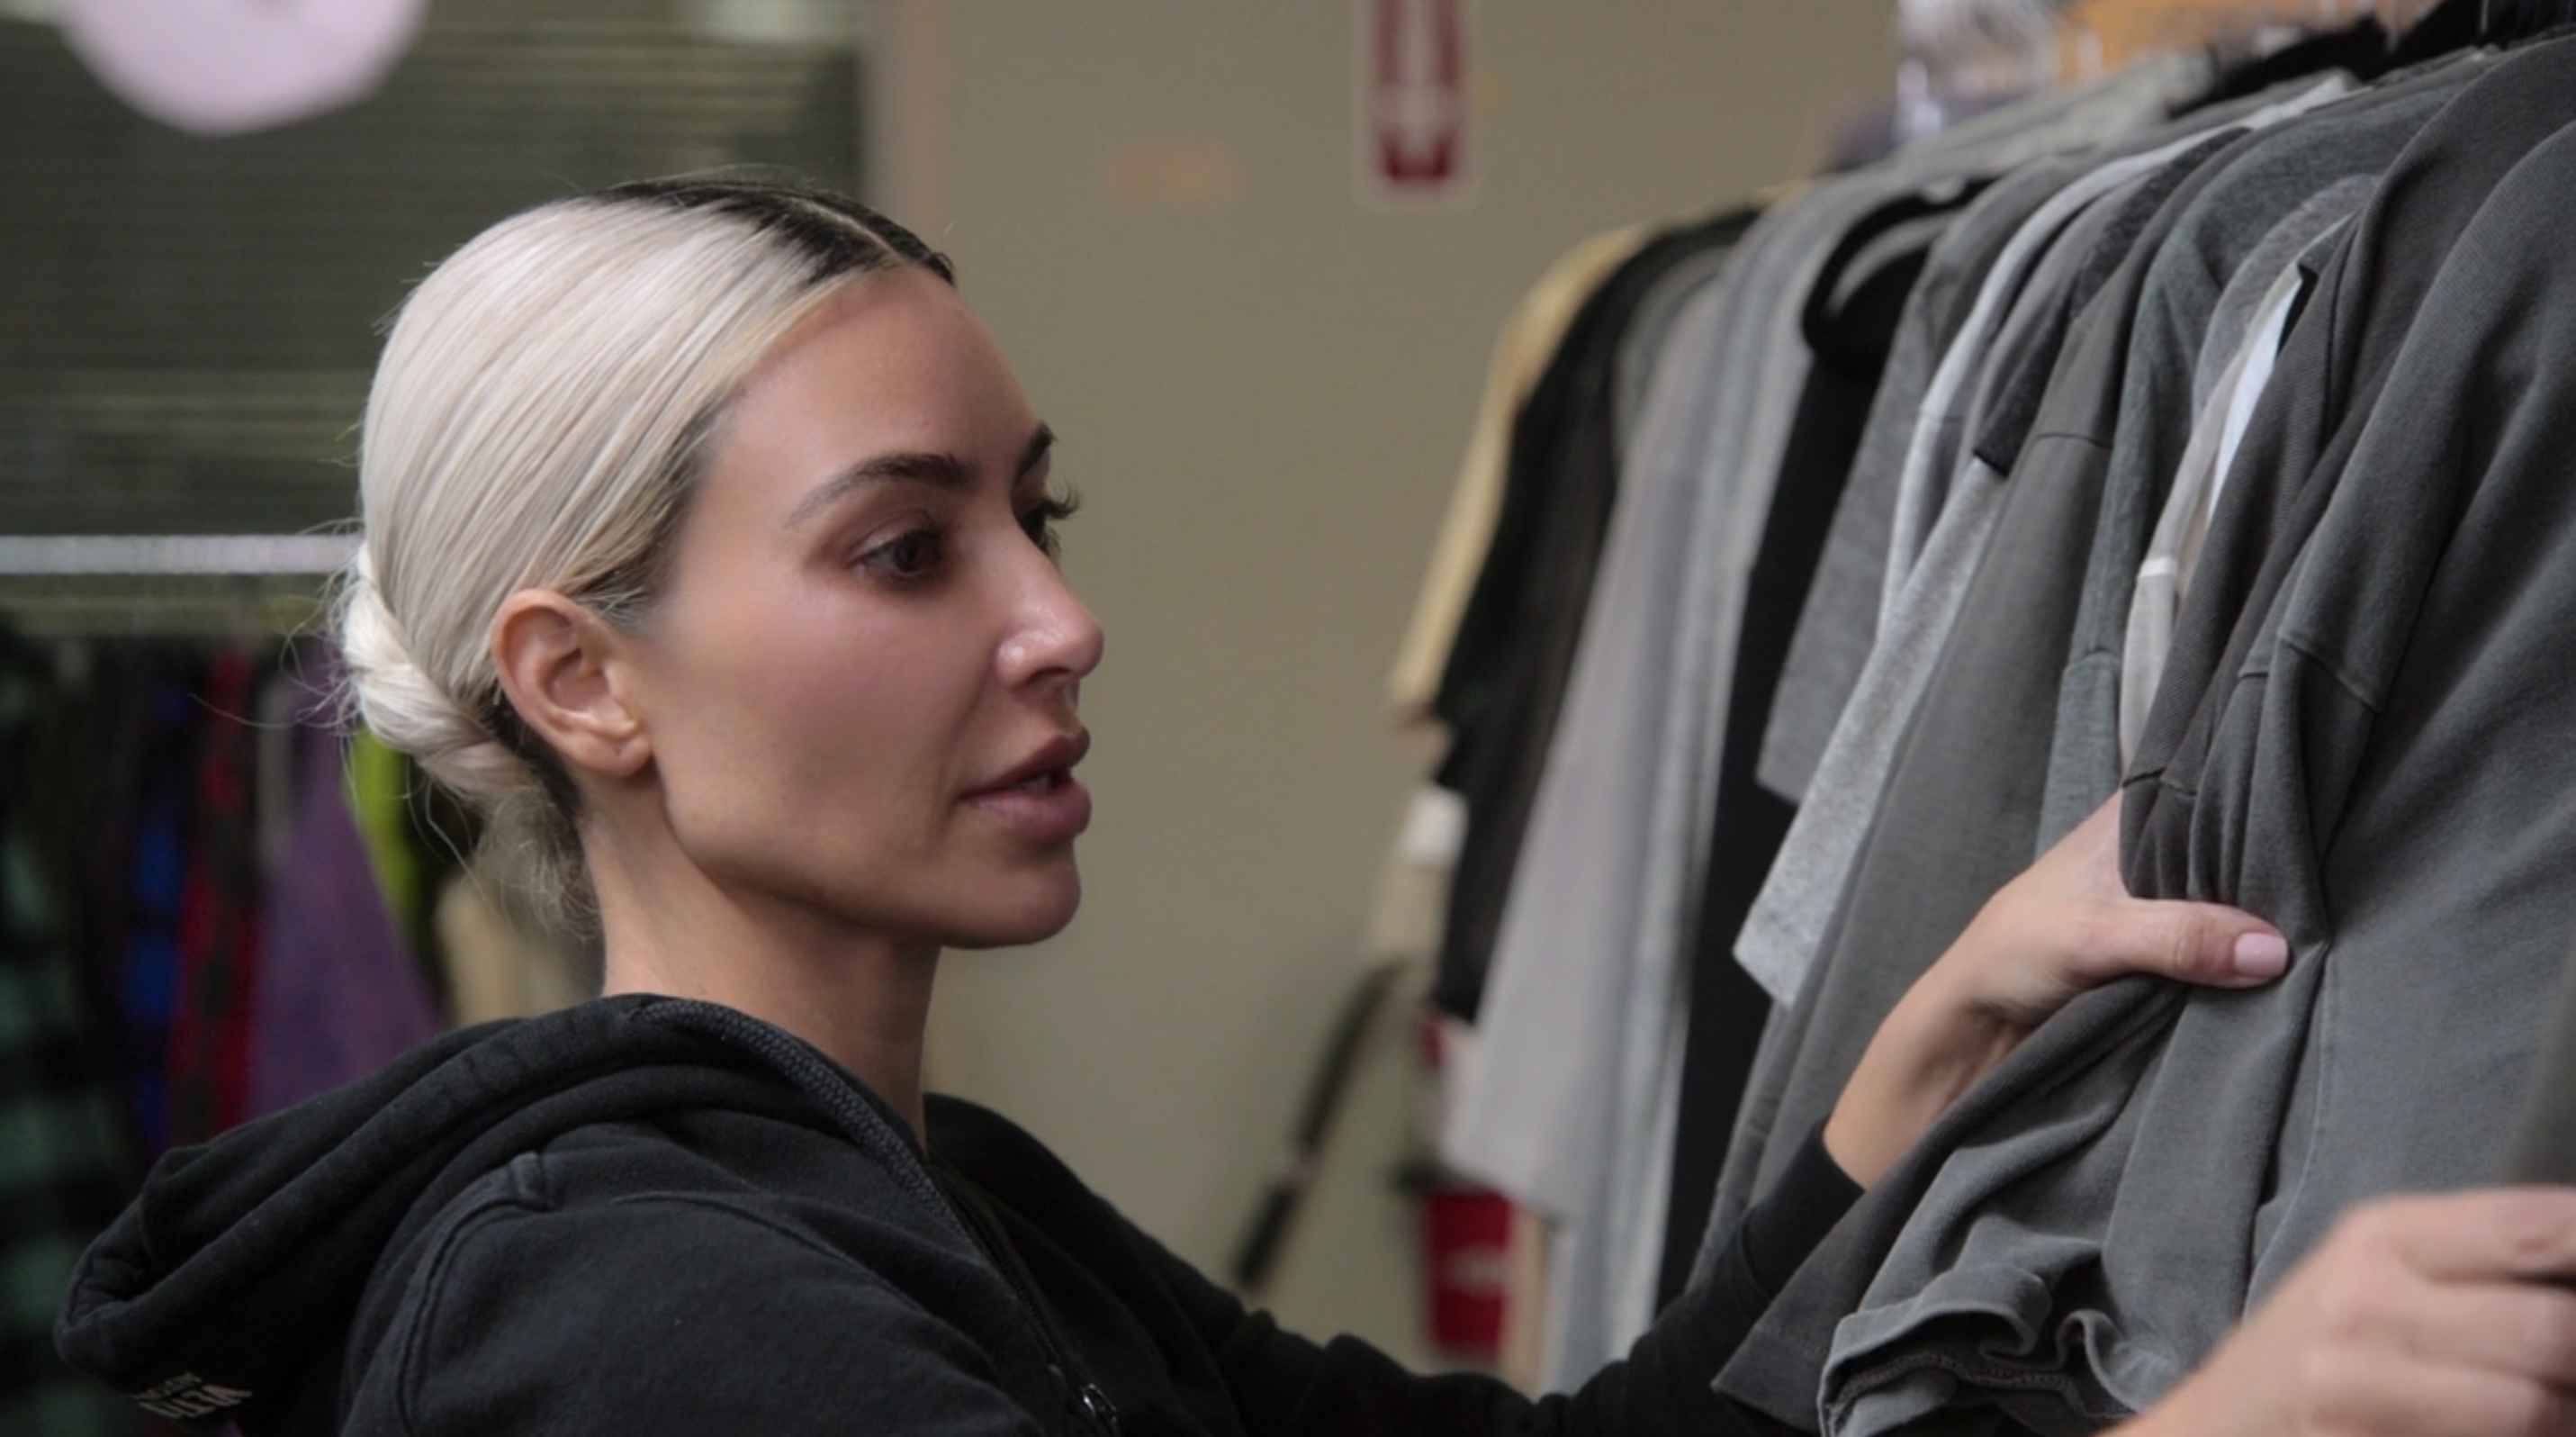 Close-up of Kim looking at the clothing